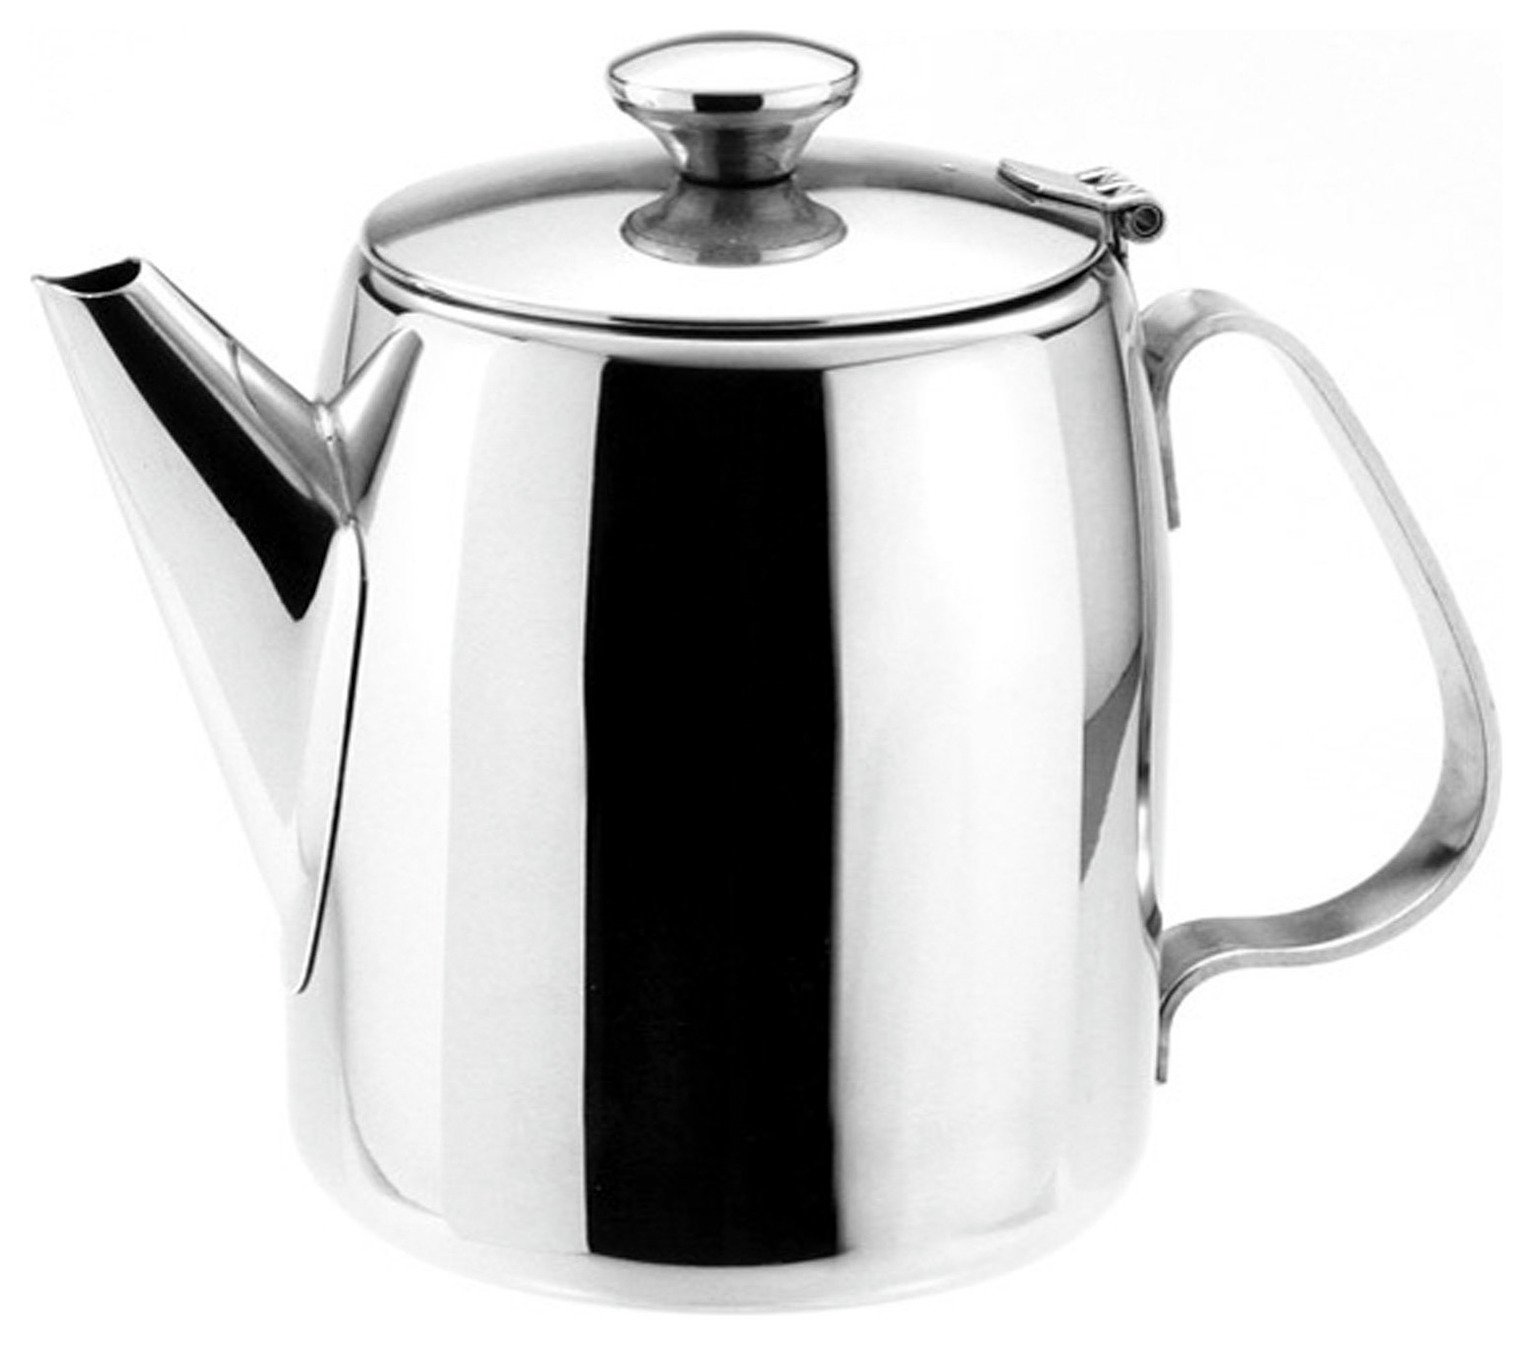 Zodiac Sunnex Superior 4 Cup Teapot - Stainless Steel